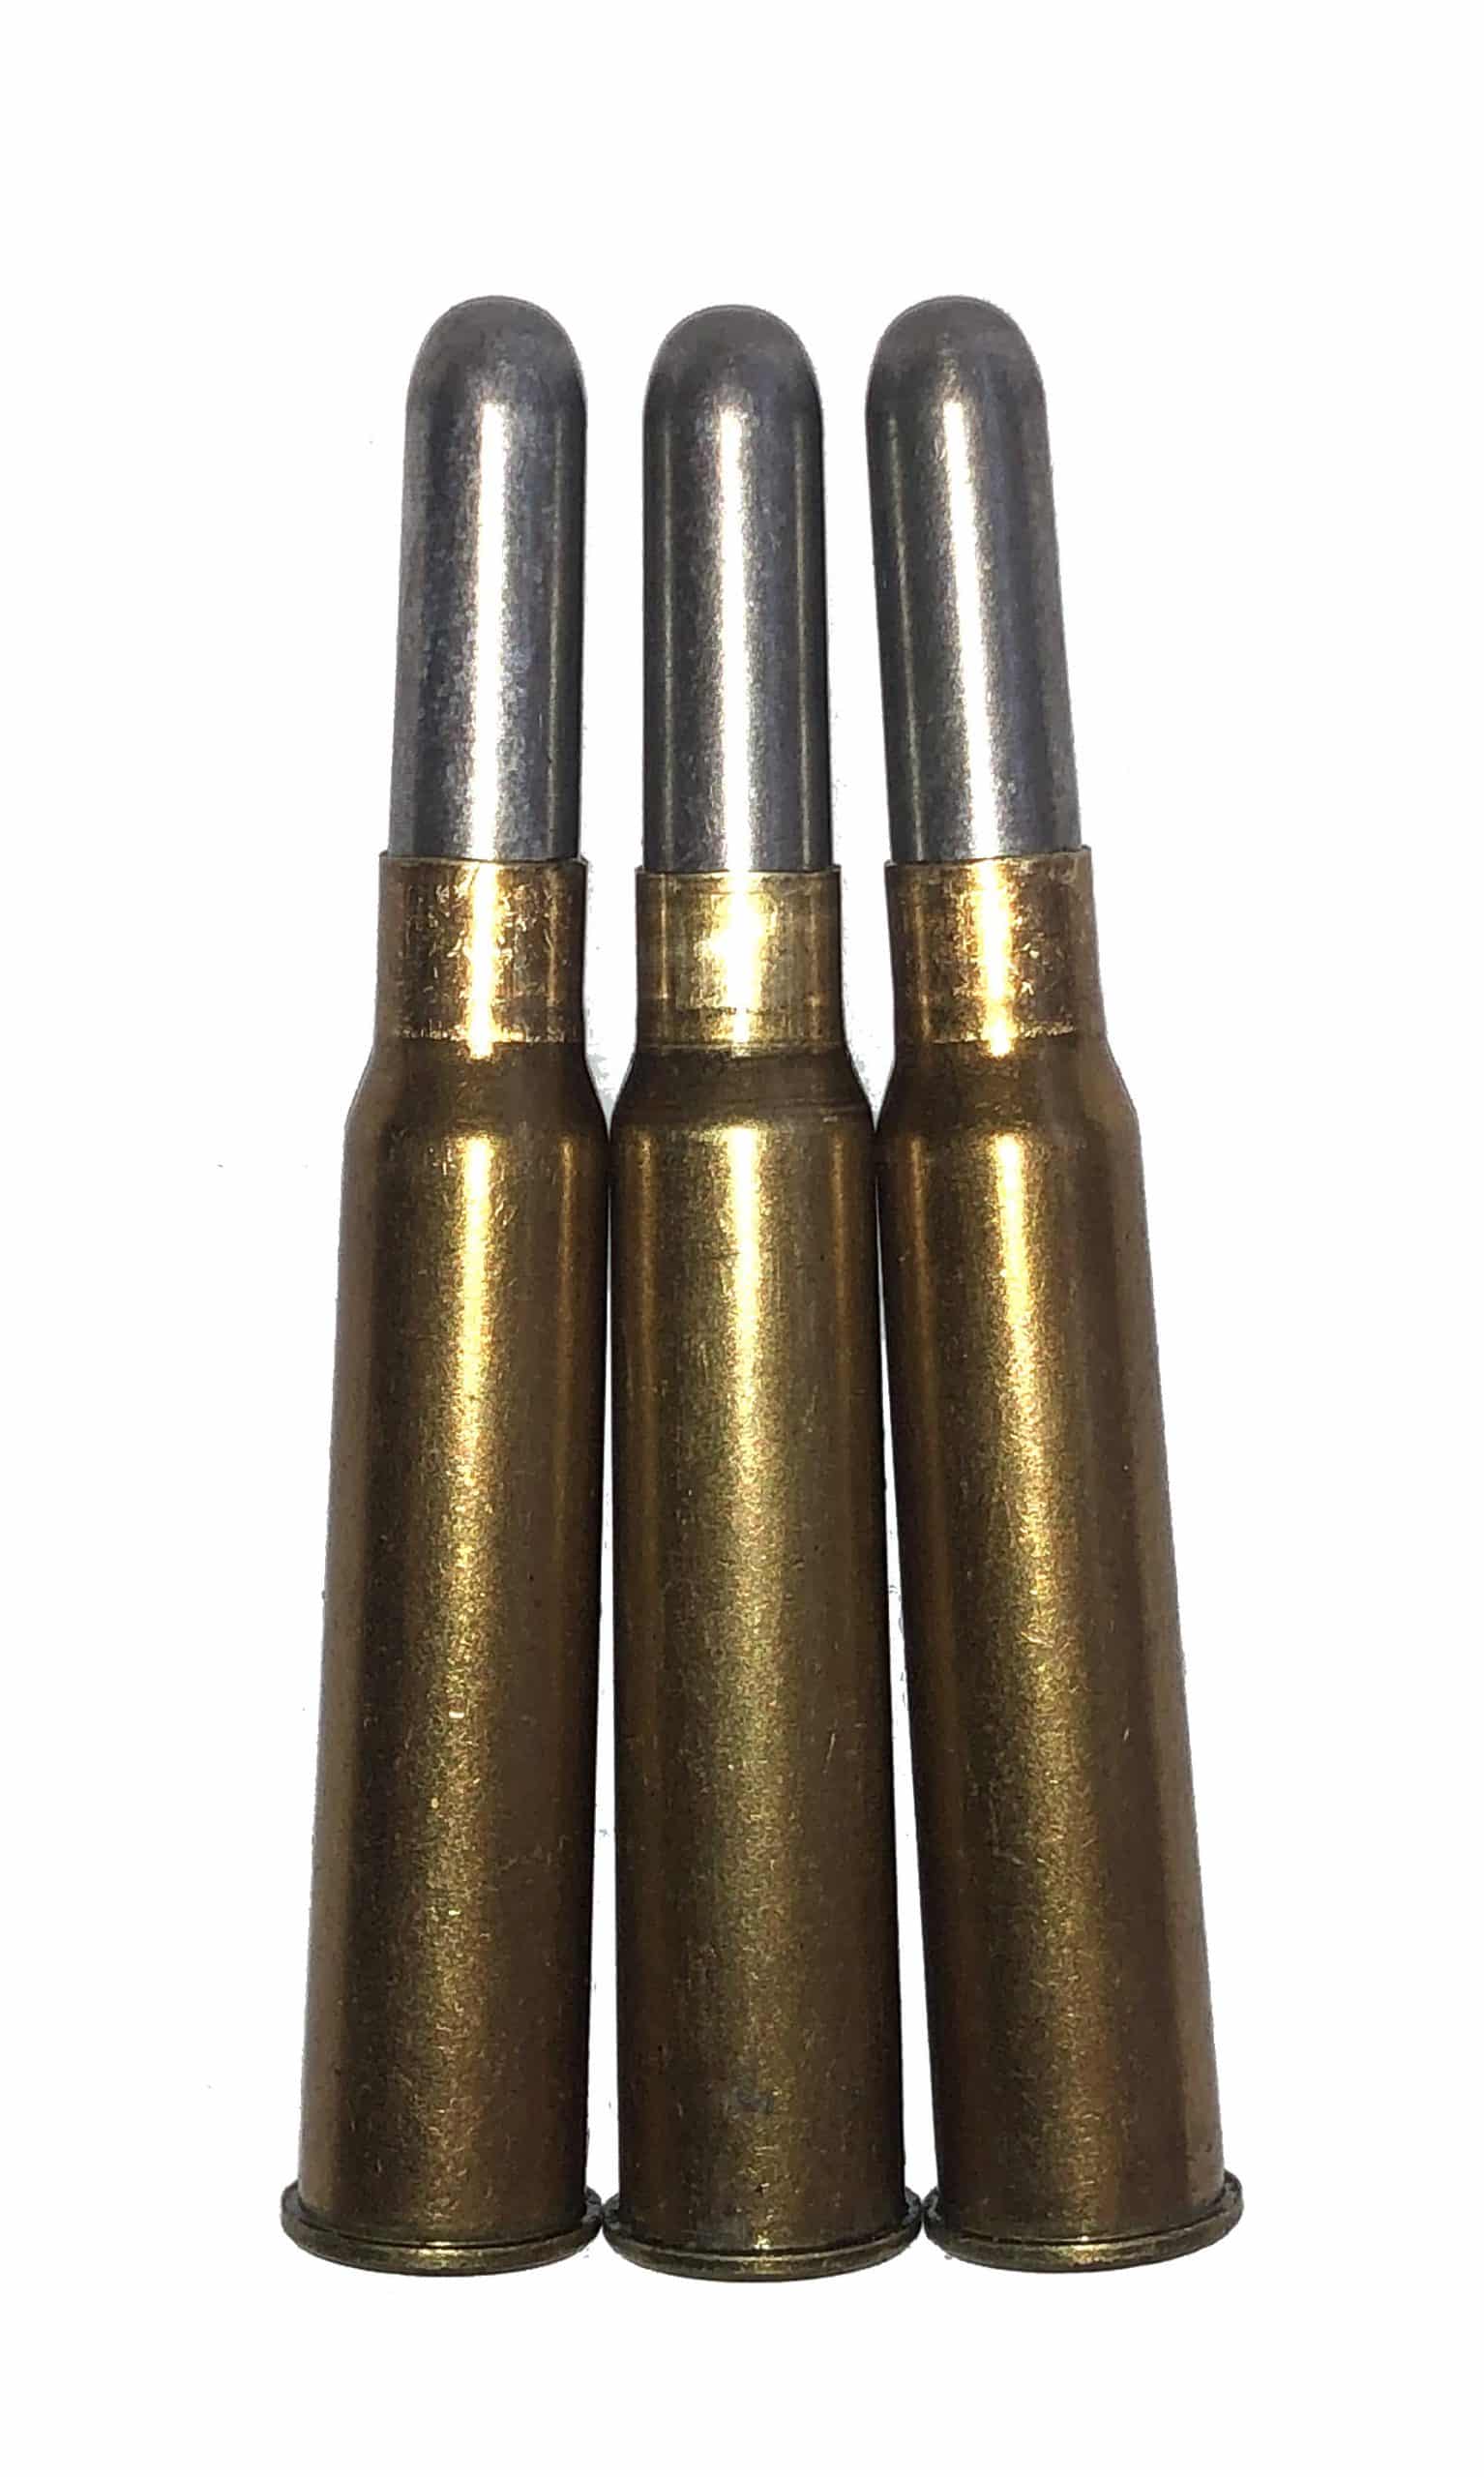 8x57JR Mauser Snap Caps Cupro-nickel Dummy Rounds Fake Bullets J&M Spec INERT